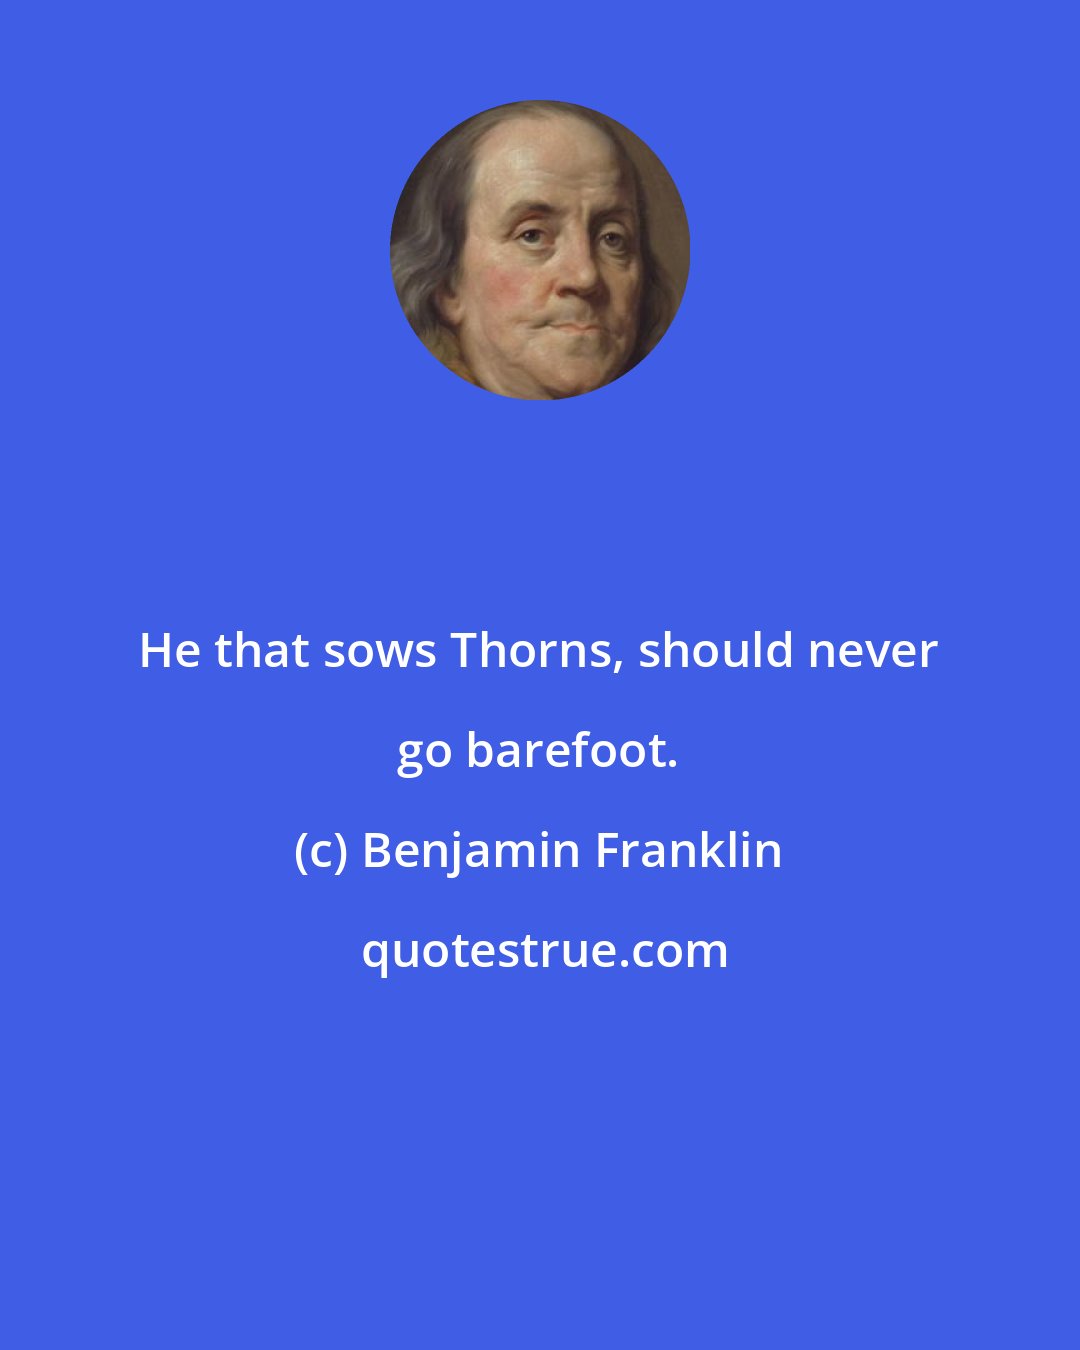 Benjamin Franklin: He that sows Thorns, should never go barefoot.